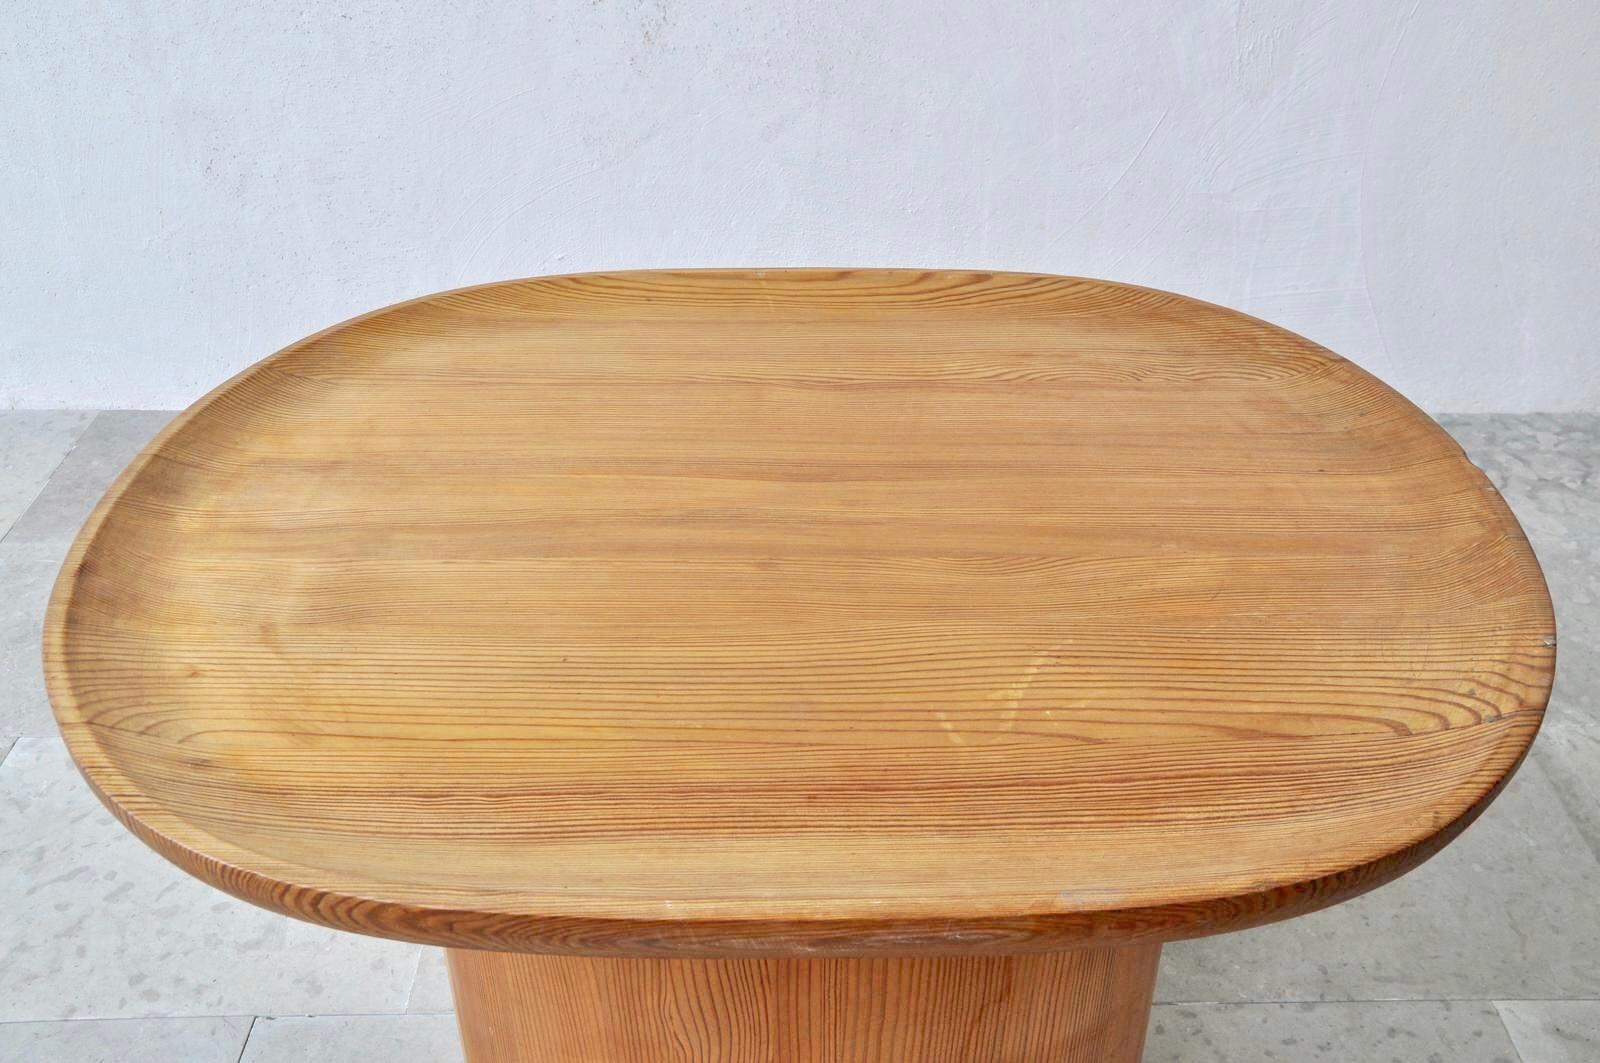 Swedish Axel Einar Hjorth Pine ‘Uto’ Table for Nordiska Kompaniet, Sweden, 1930